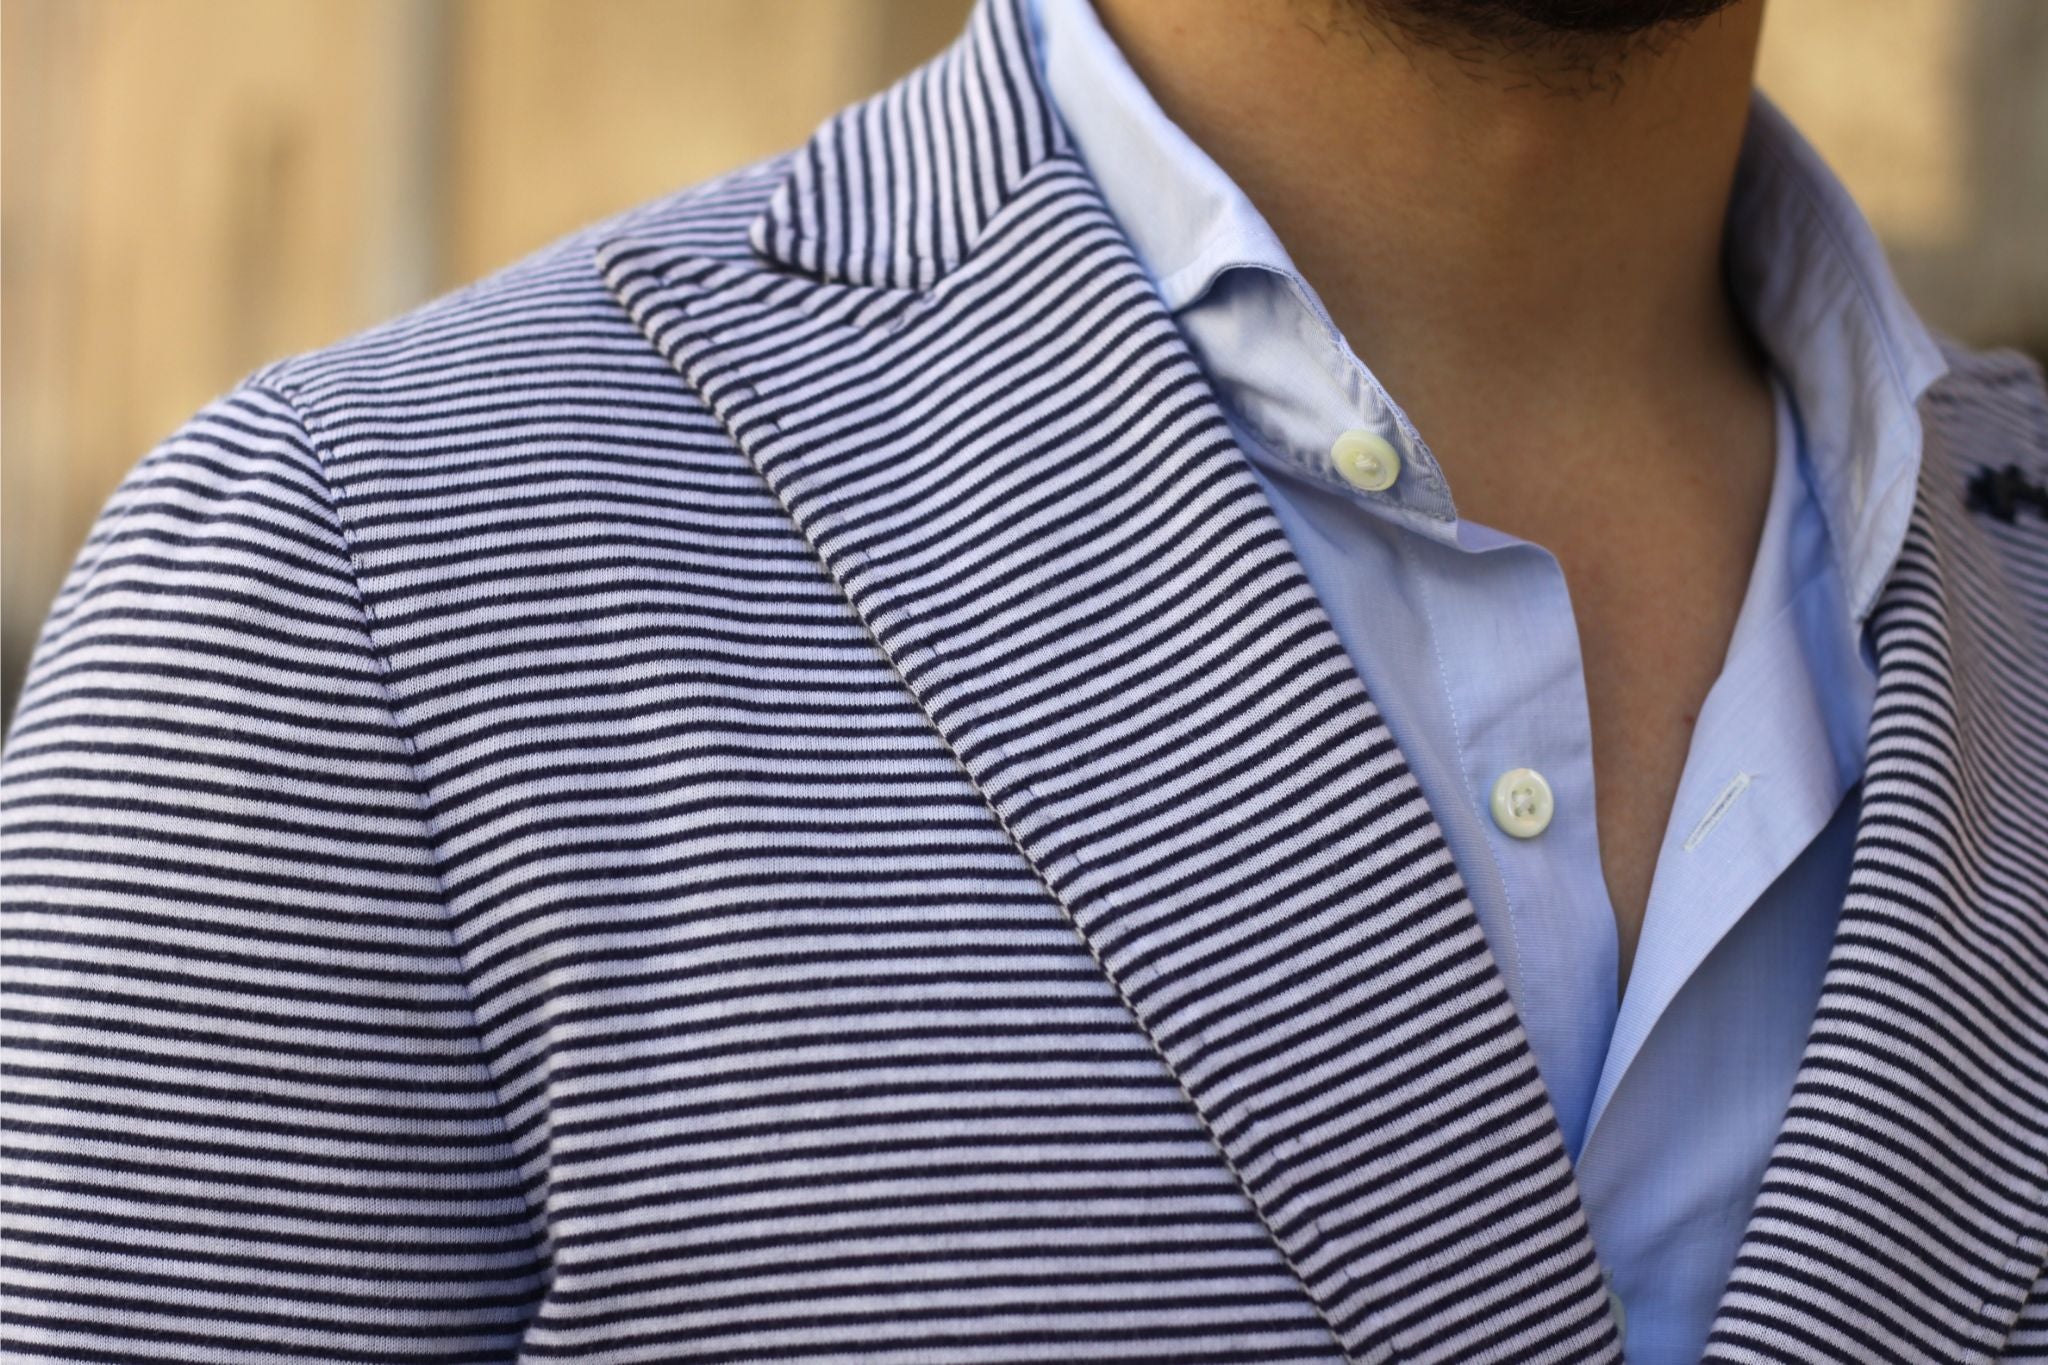 Tombolini blazer - Proper Cloth shirt